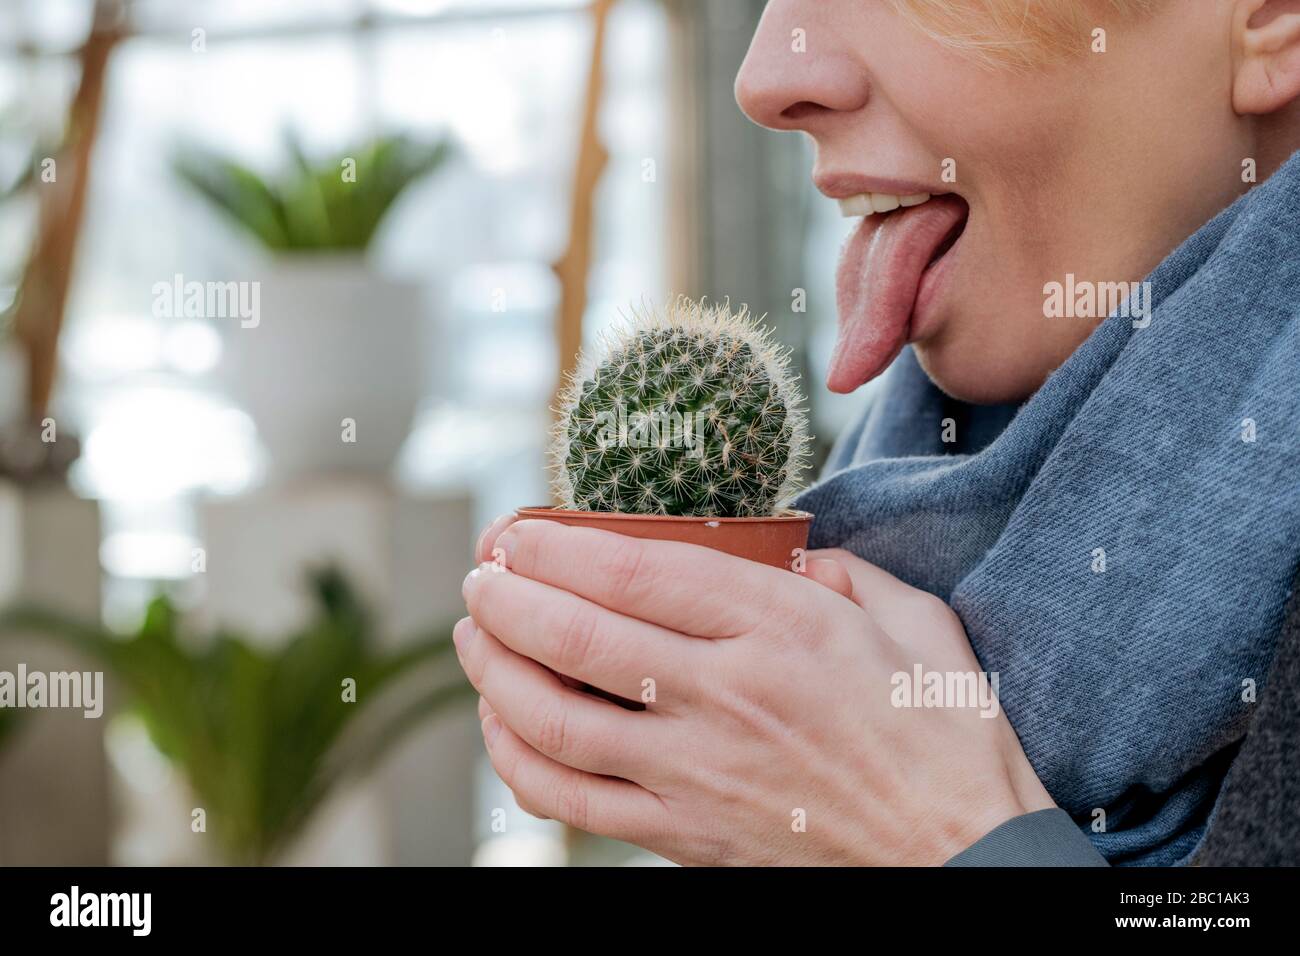 Woman licking cactus Stock Photo